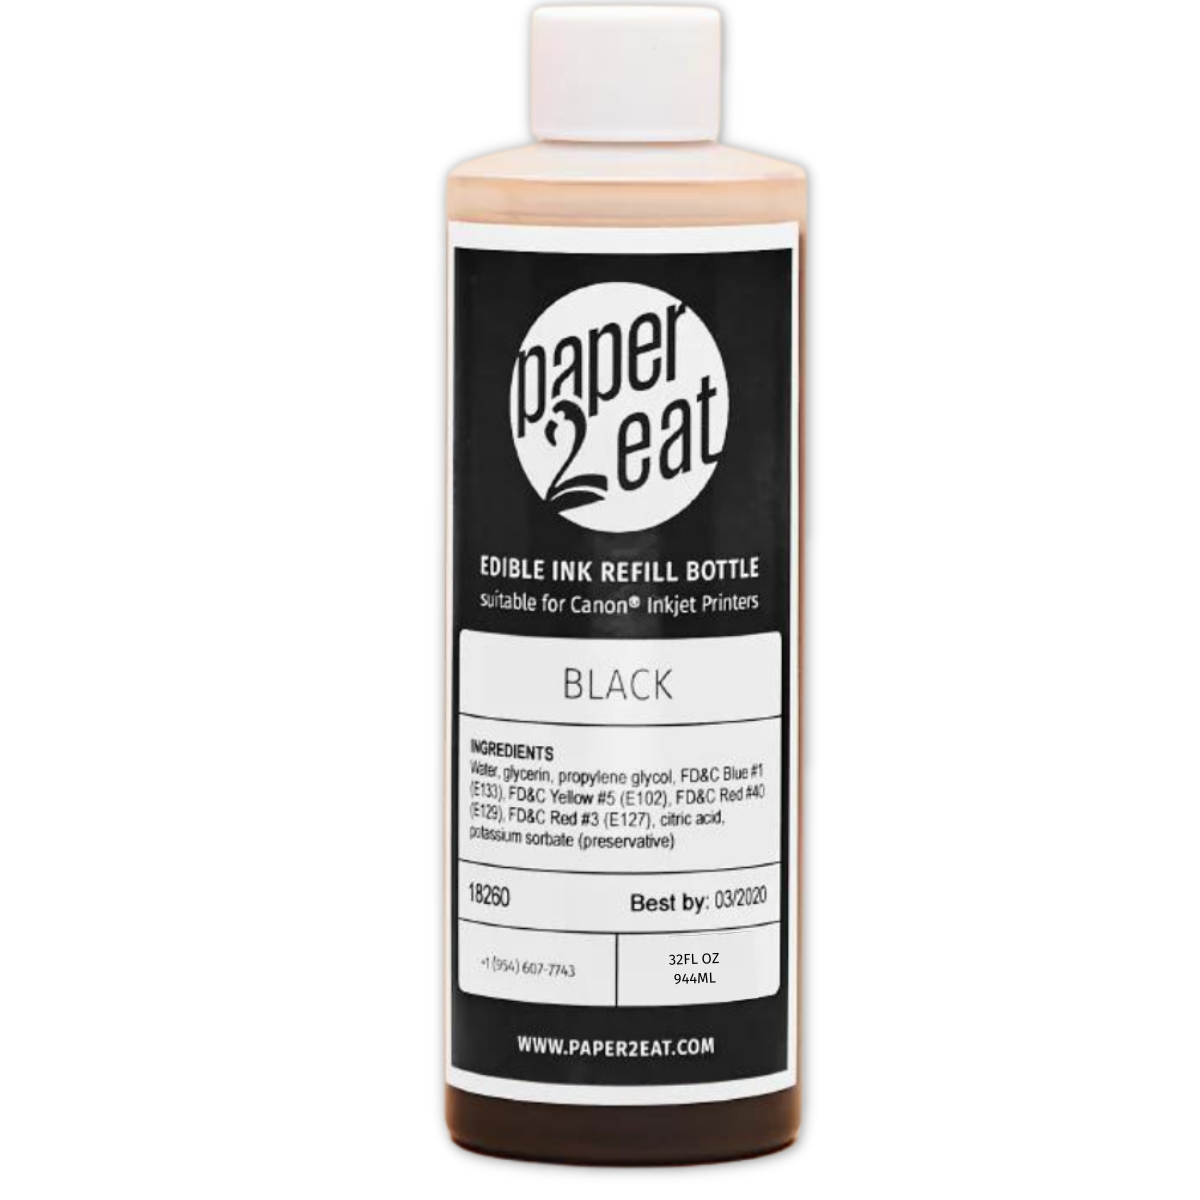 32 fl. oz. (944 ml) Black Edible Ink Refill Bottle